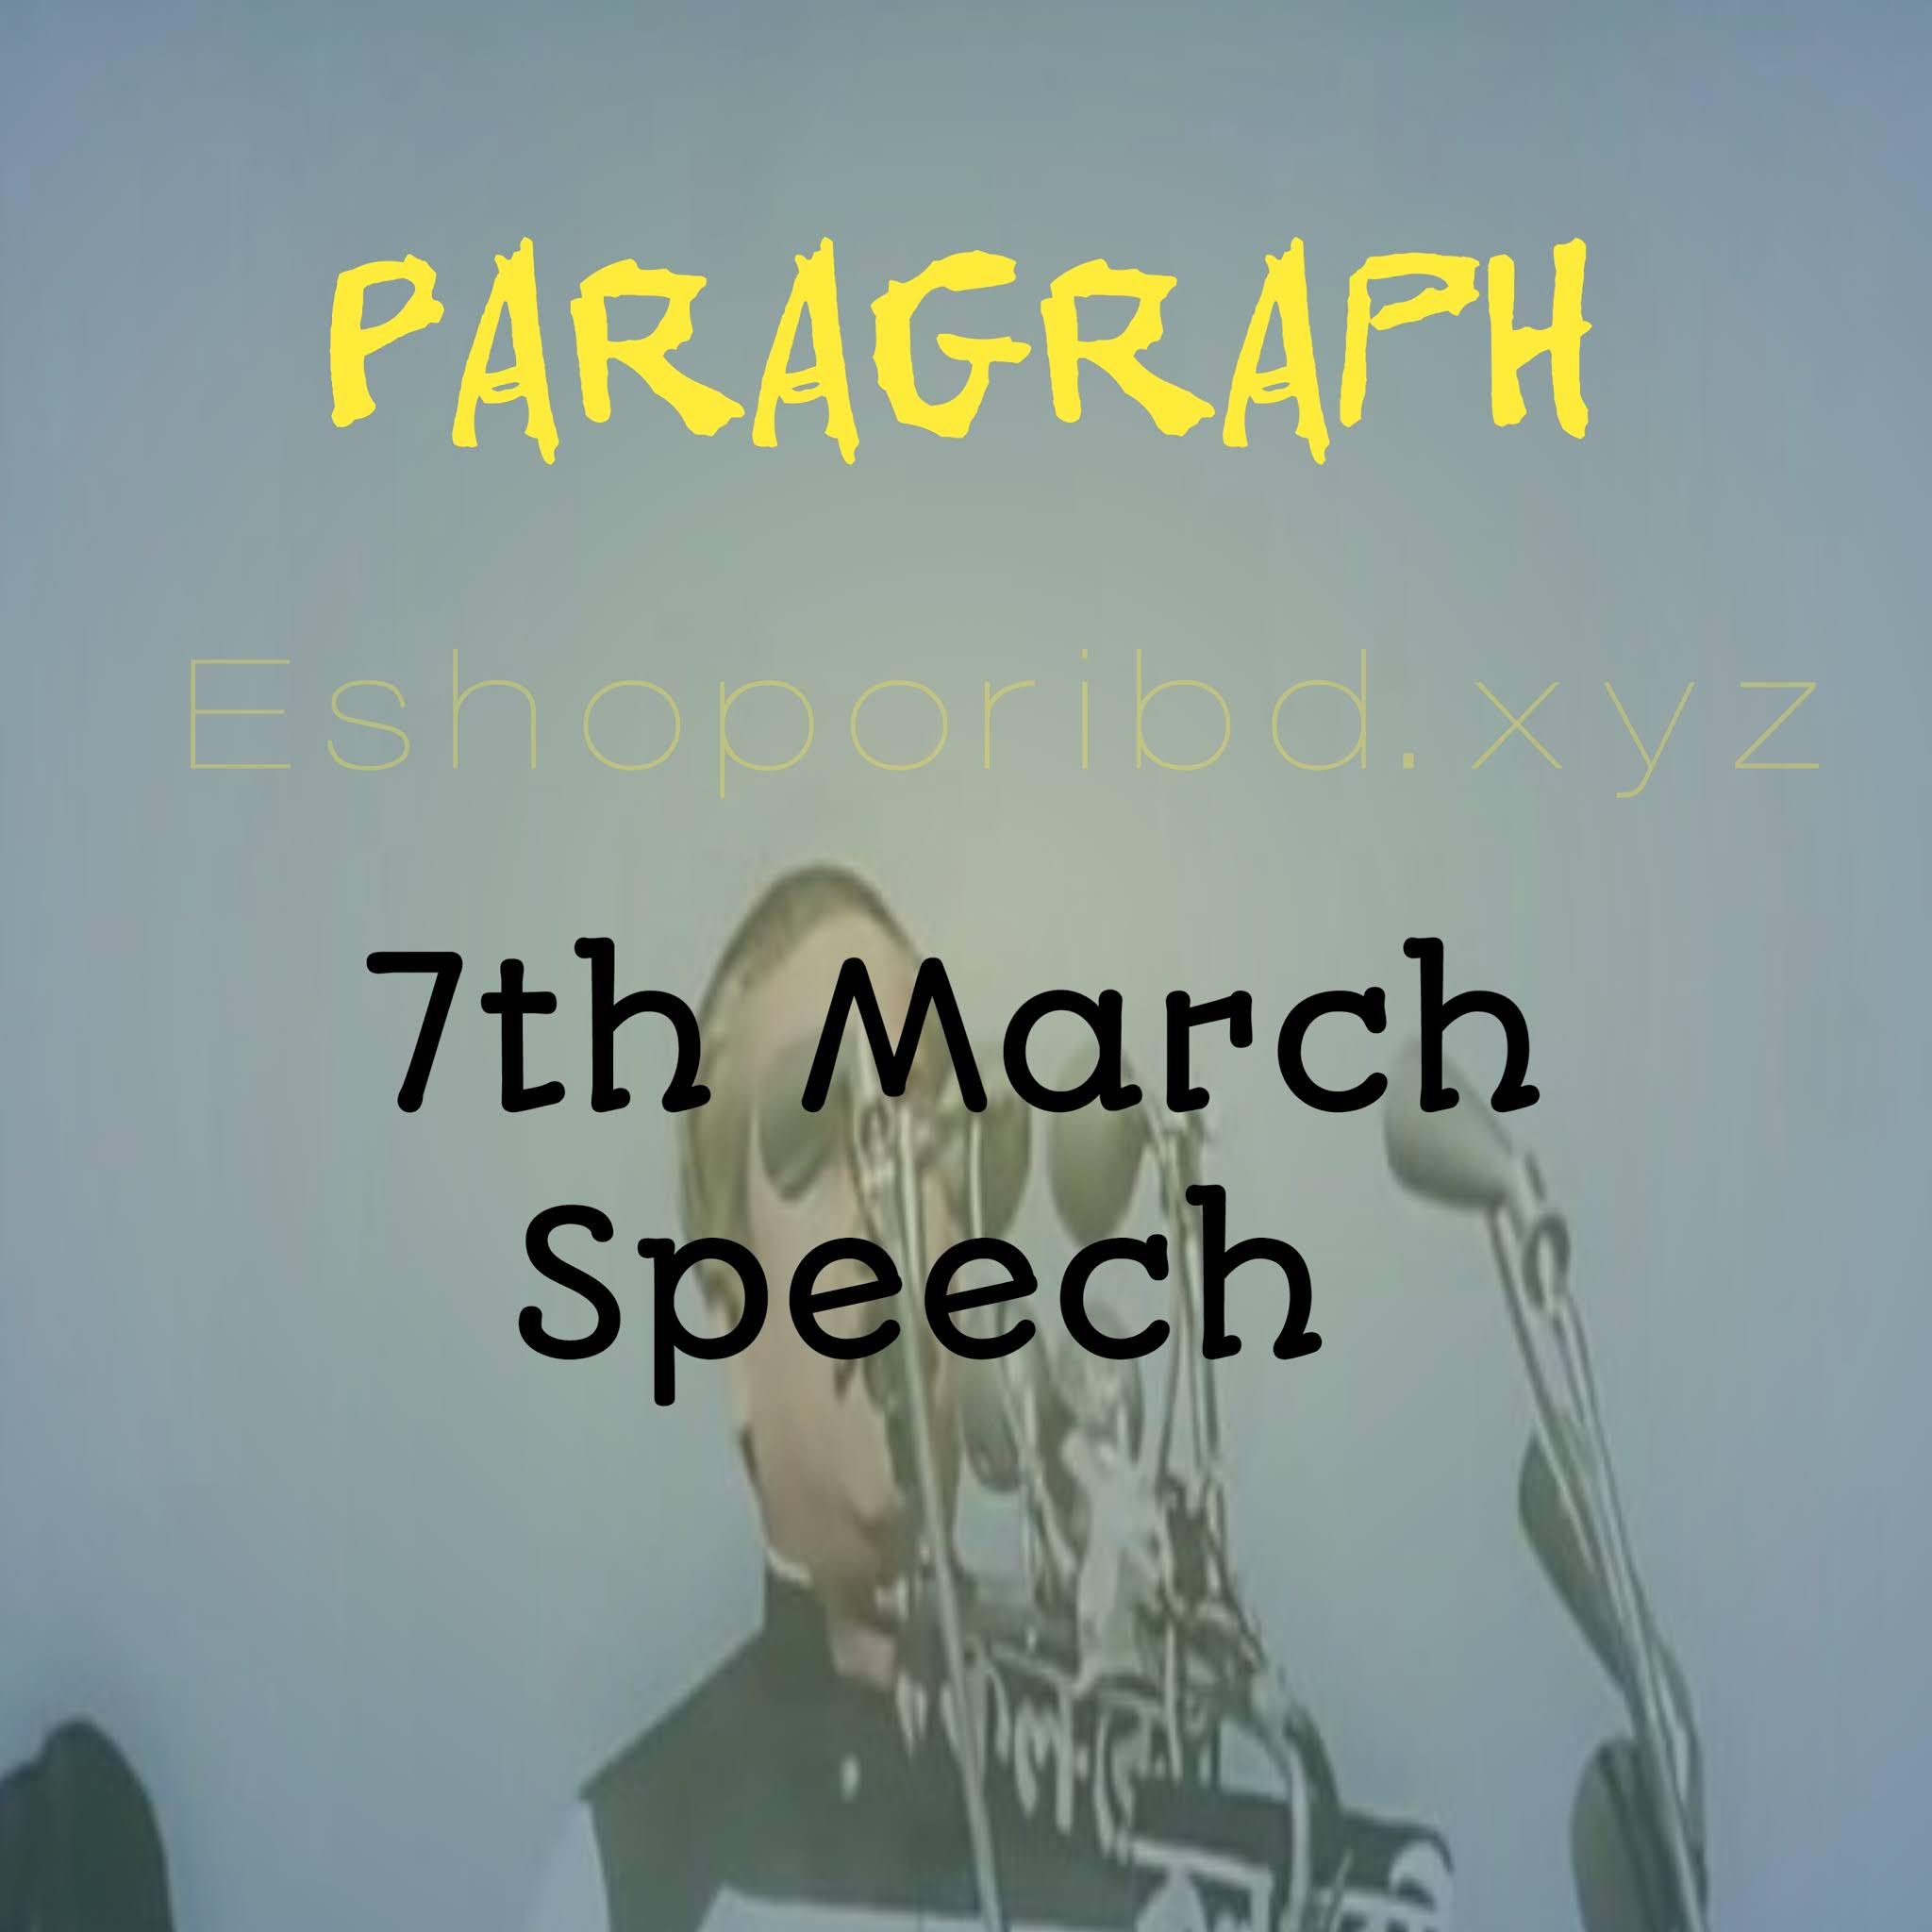 7th March speech, paragraph 7th March speech, ৭ই মার্চের ভাষন ইংরেজি প্যারাগ্রাফ, 7th March speech paragraph for hsc, 7th March speech paragraph